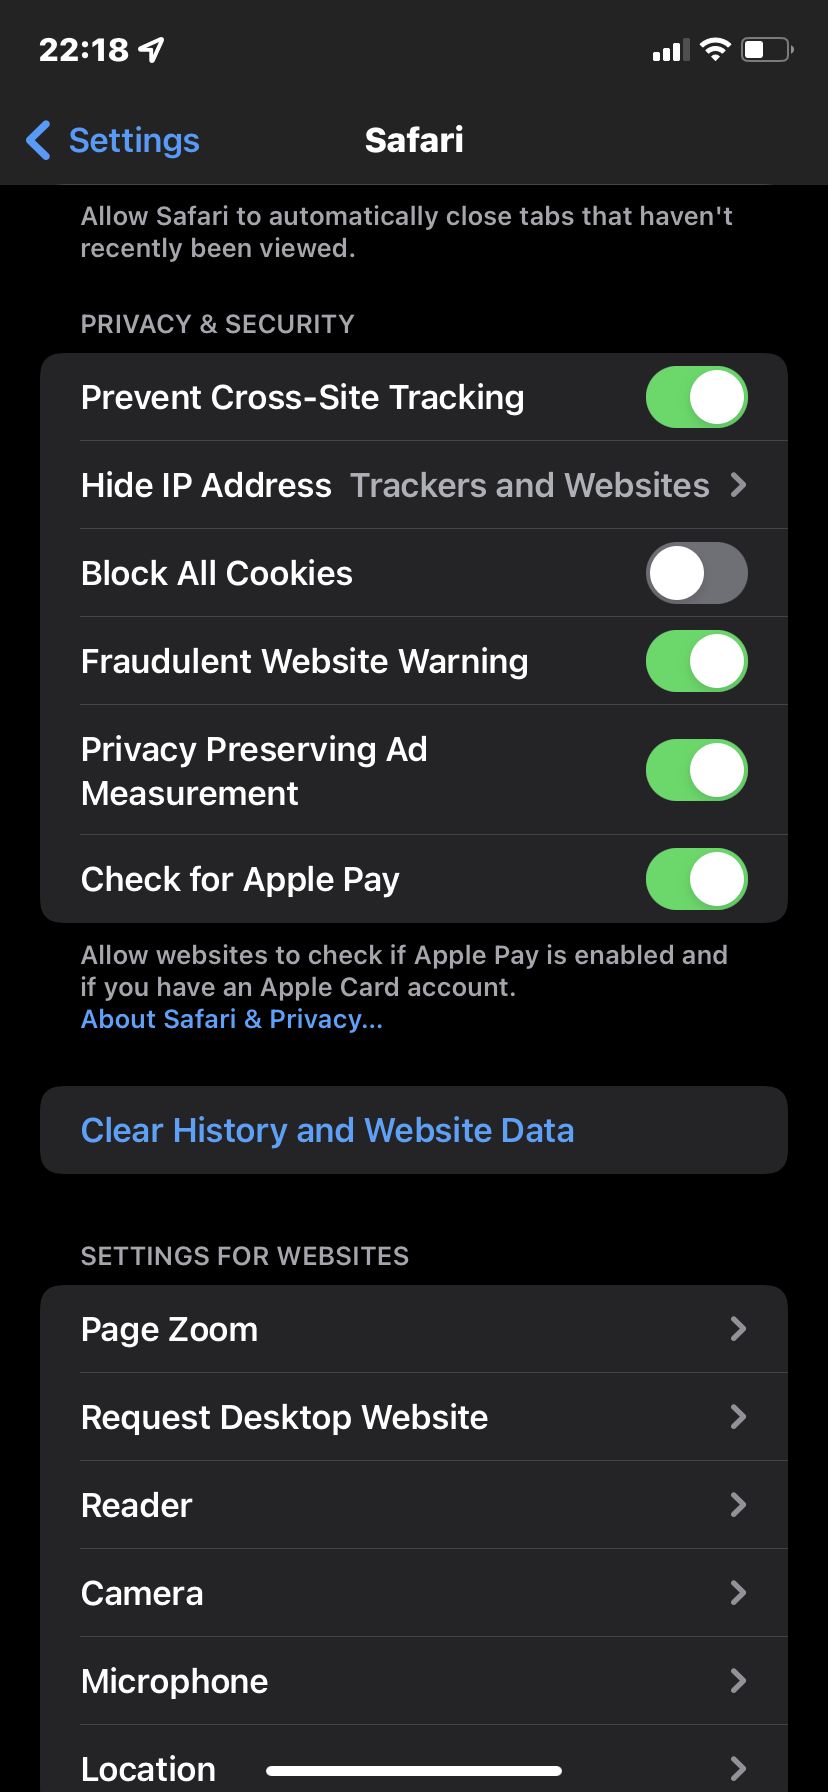 Options in the Safari storage menu in iOS.